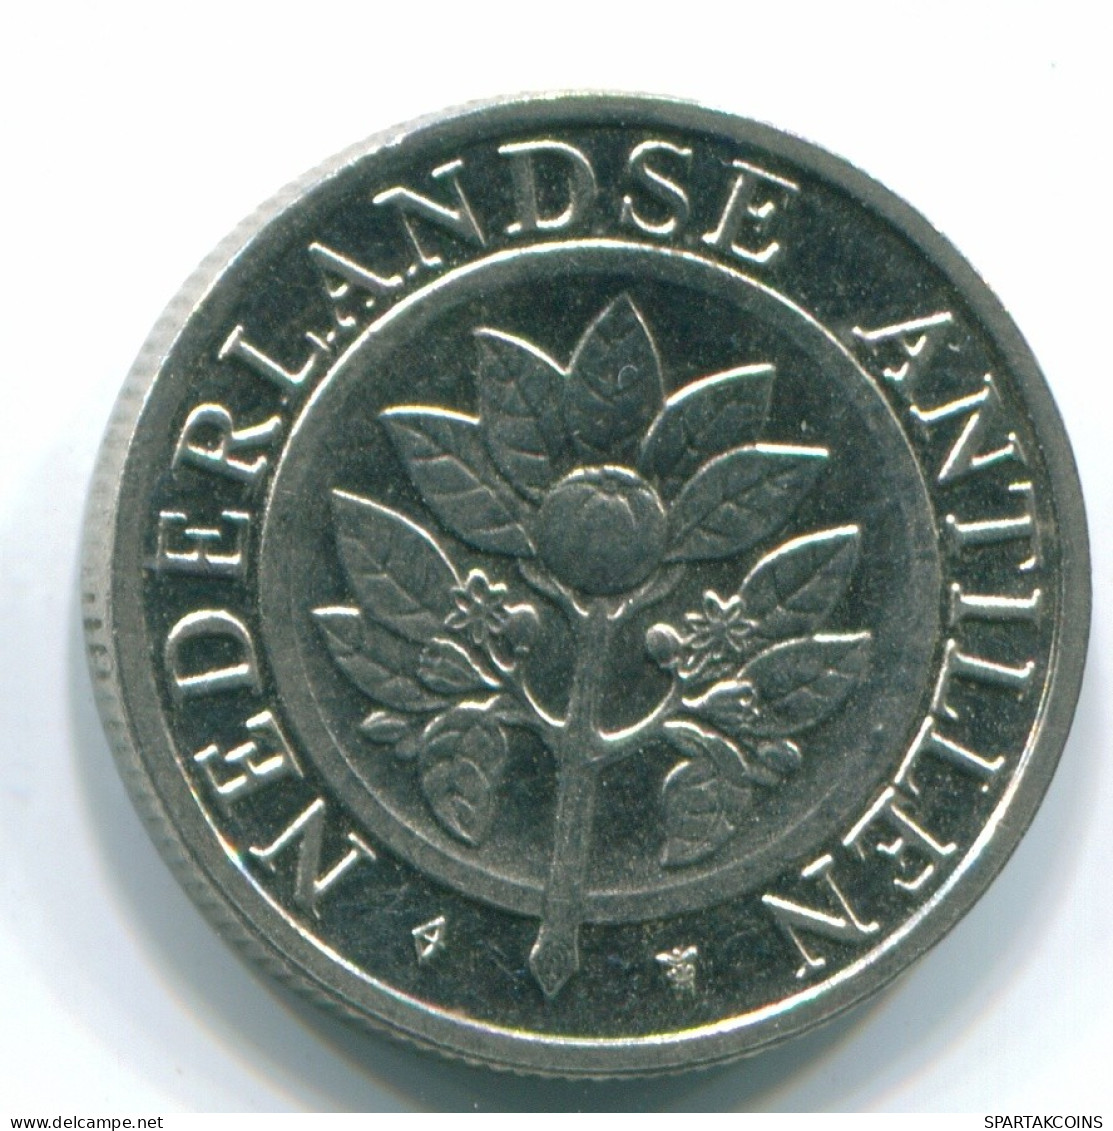 25 CENTS 1993 NIEDERLÄNDISCHE ANTILLEN Nickel Koloniale Münze #S11288.D.A - Netherlands Antilles